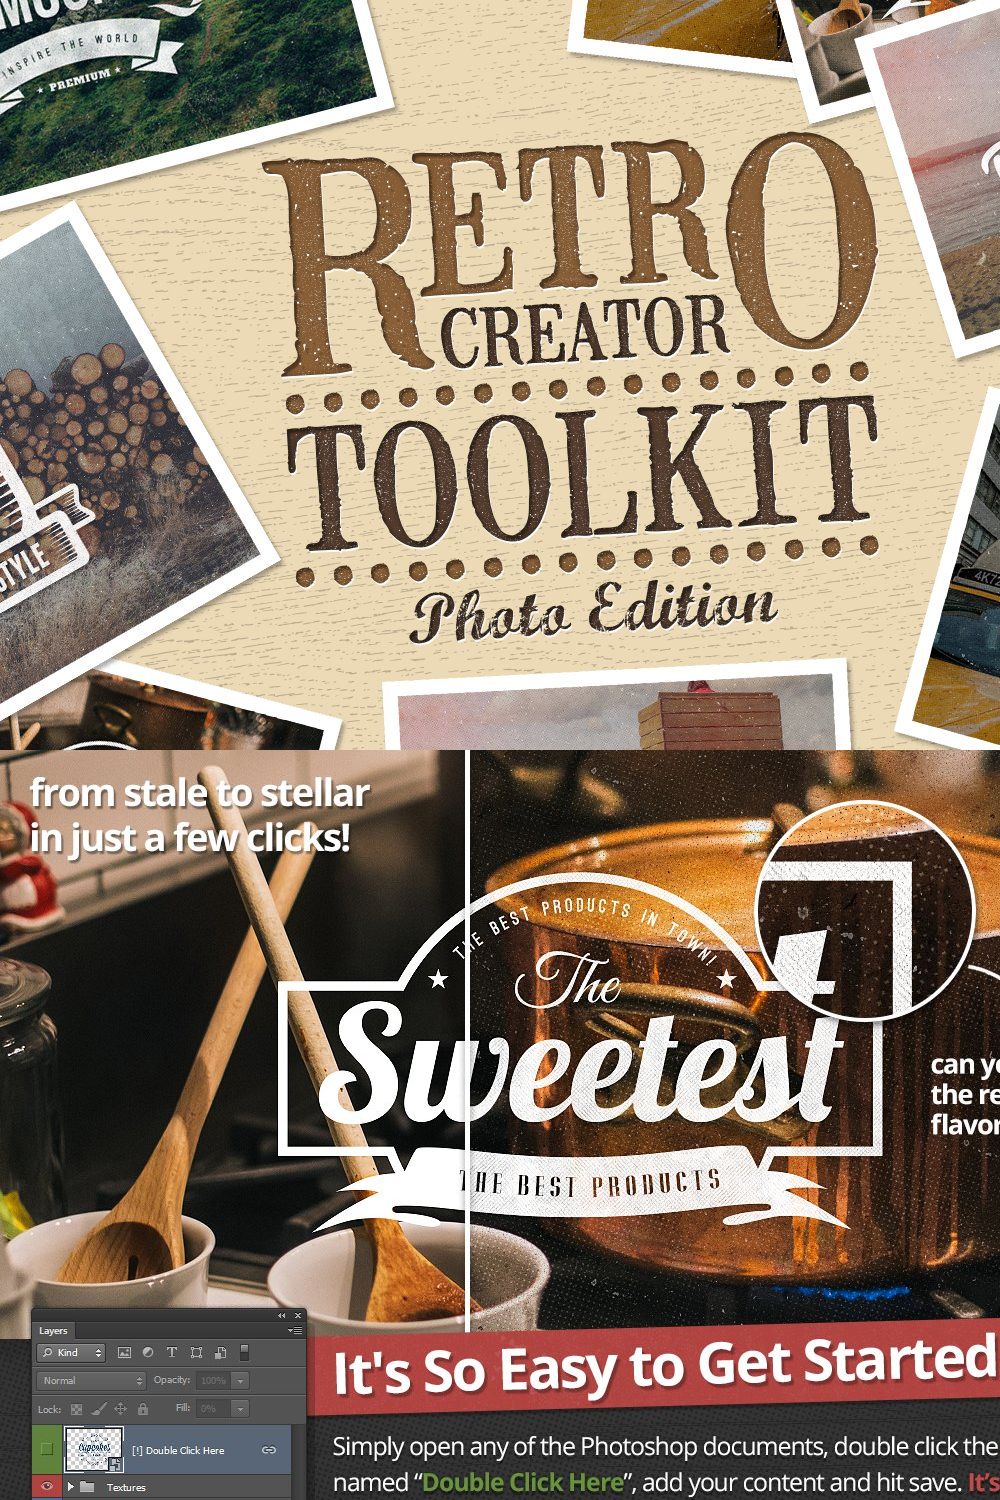 Retro Creator Tool Kit Photo Edition pinterest preview image.